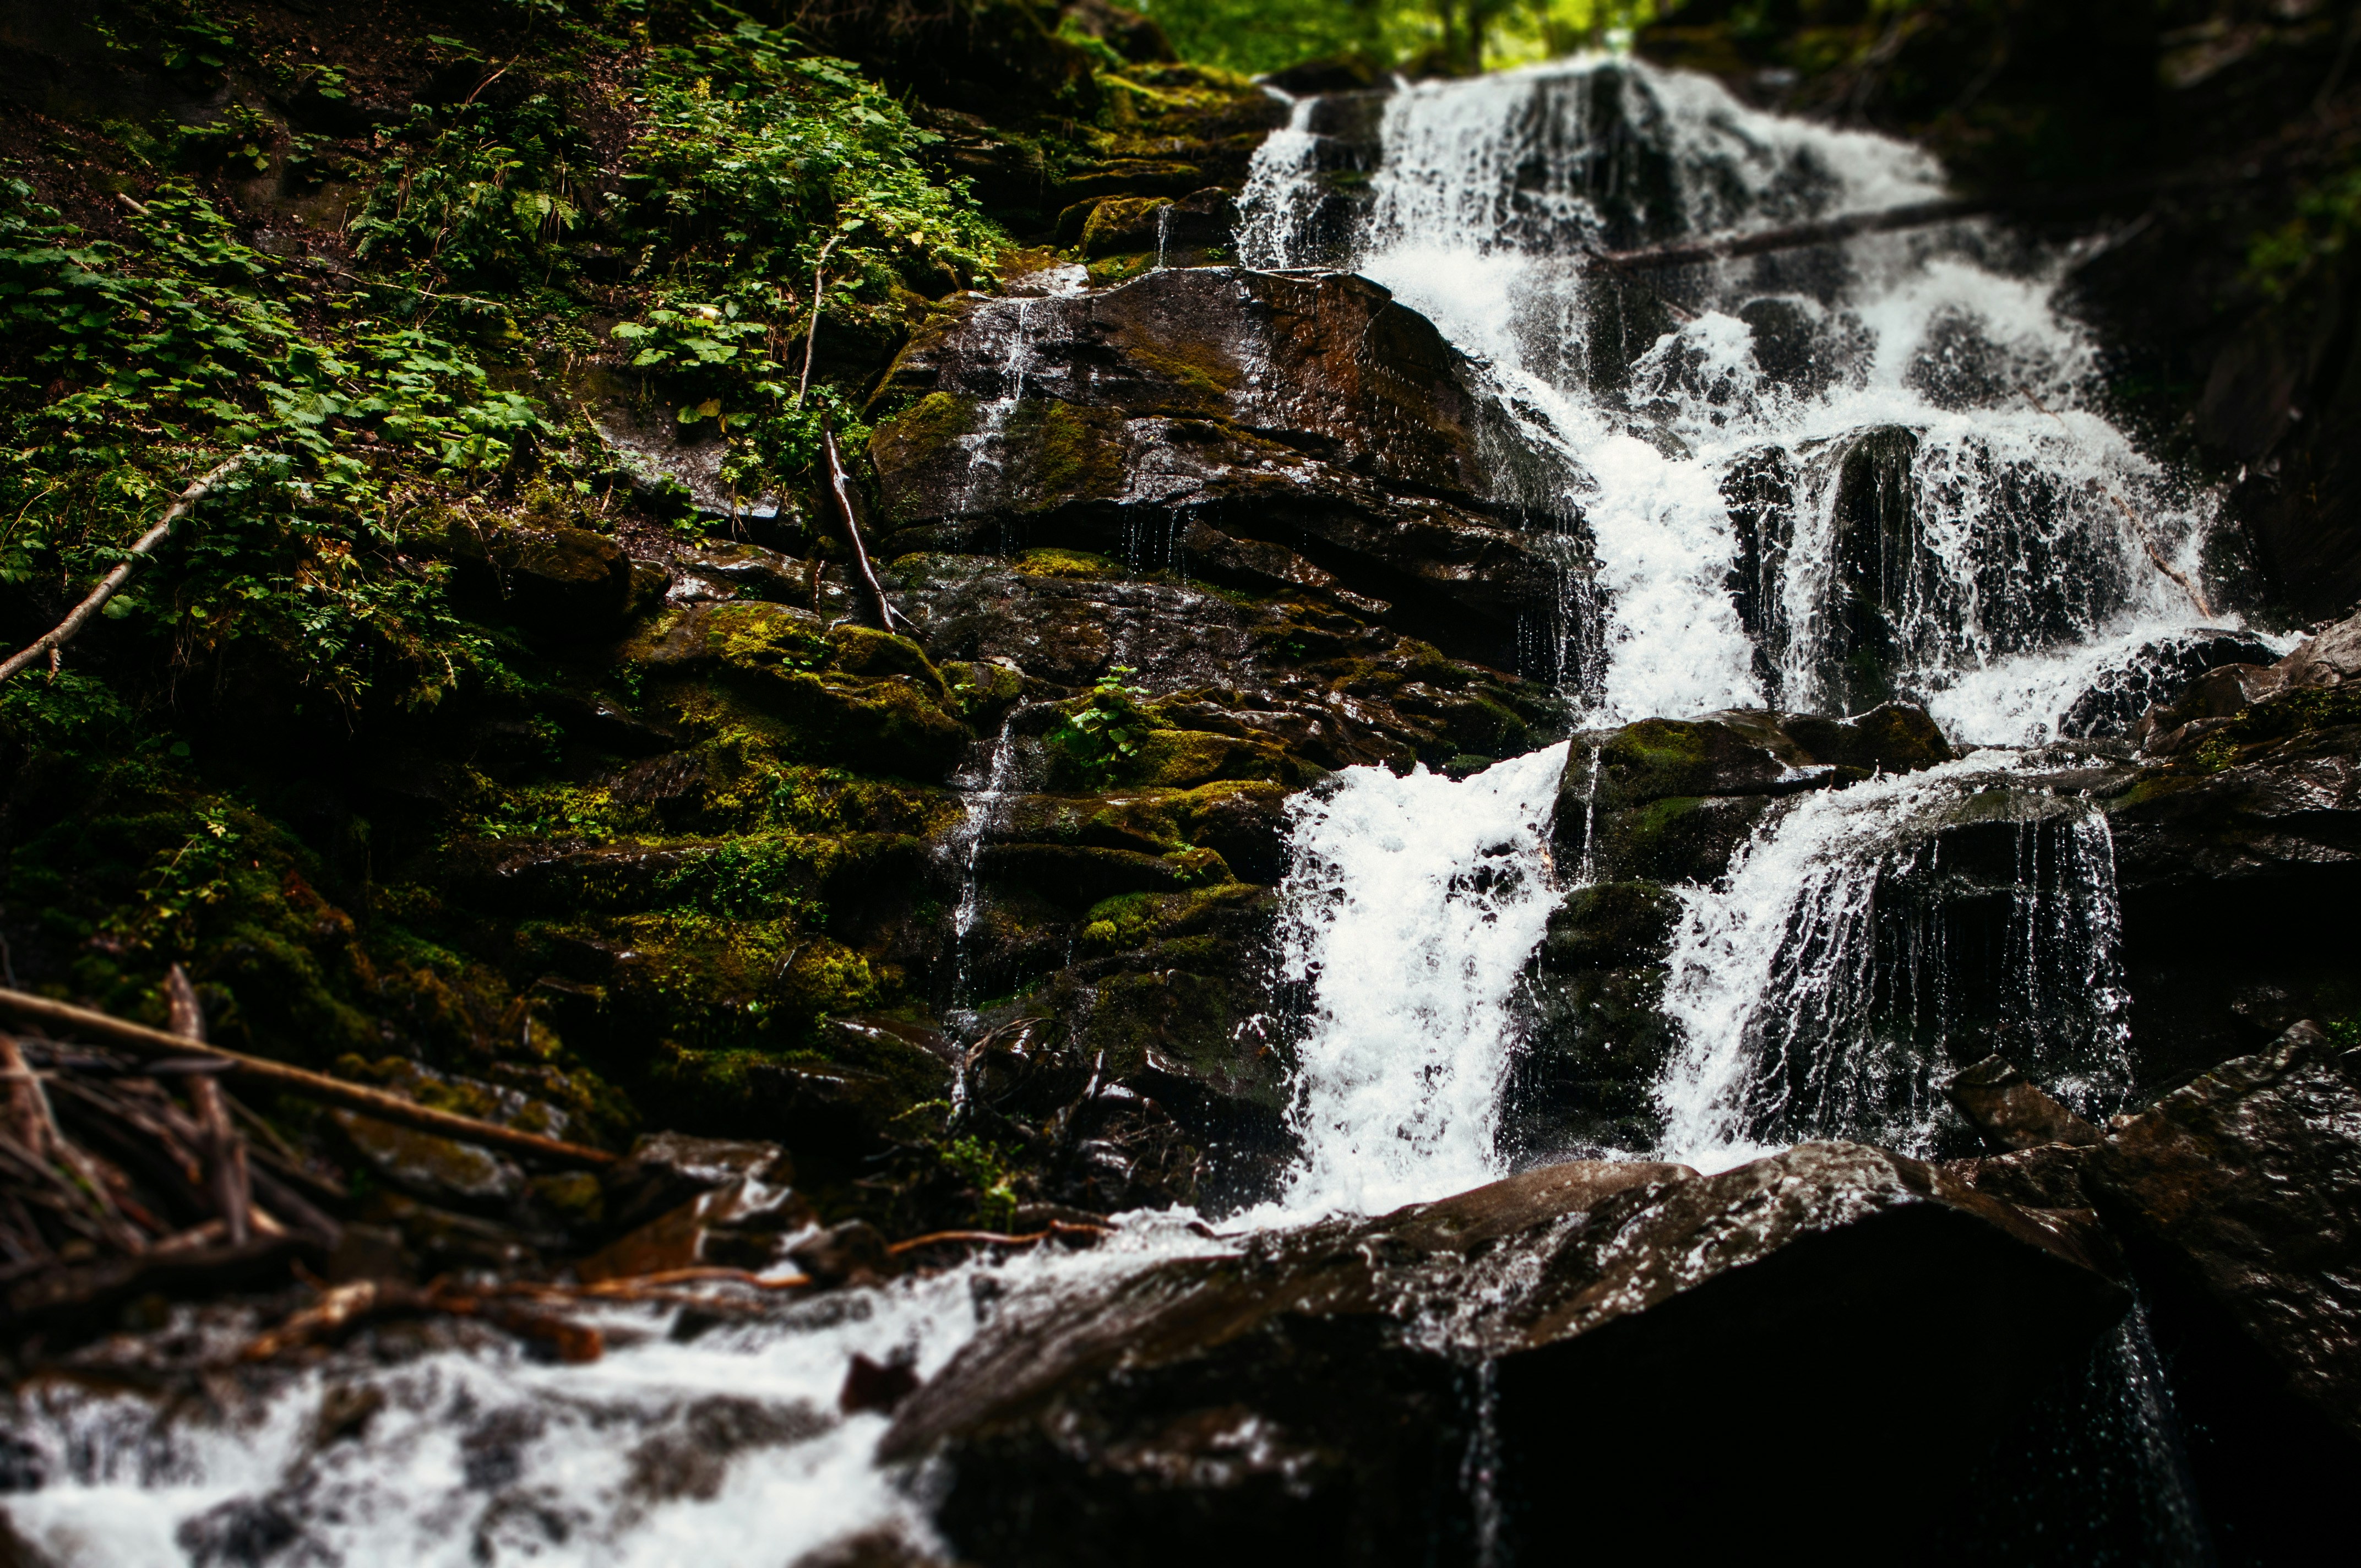 Shipot waterfall